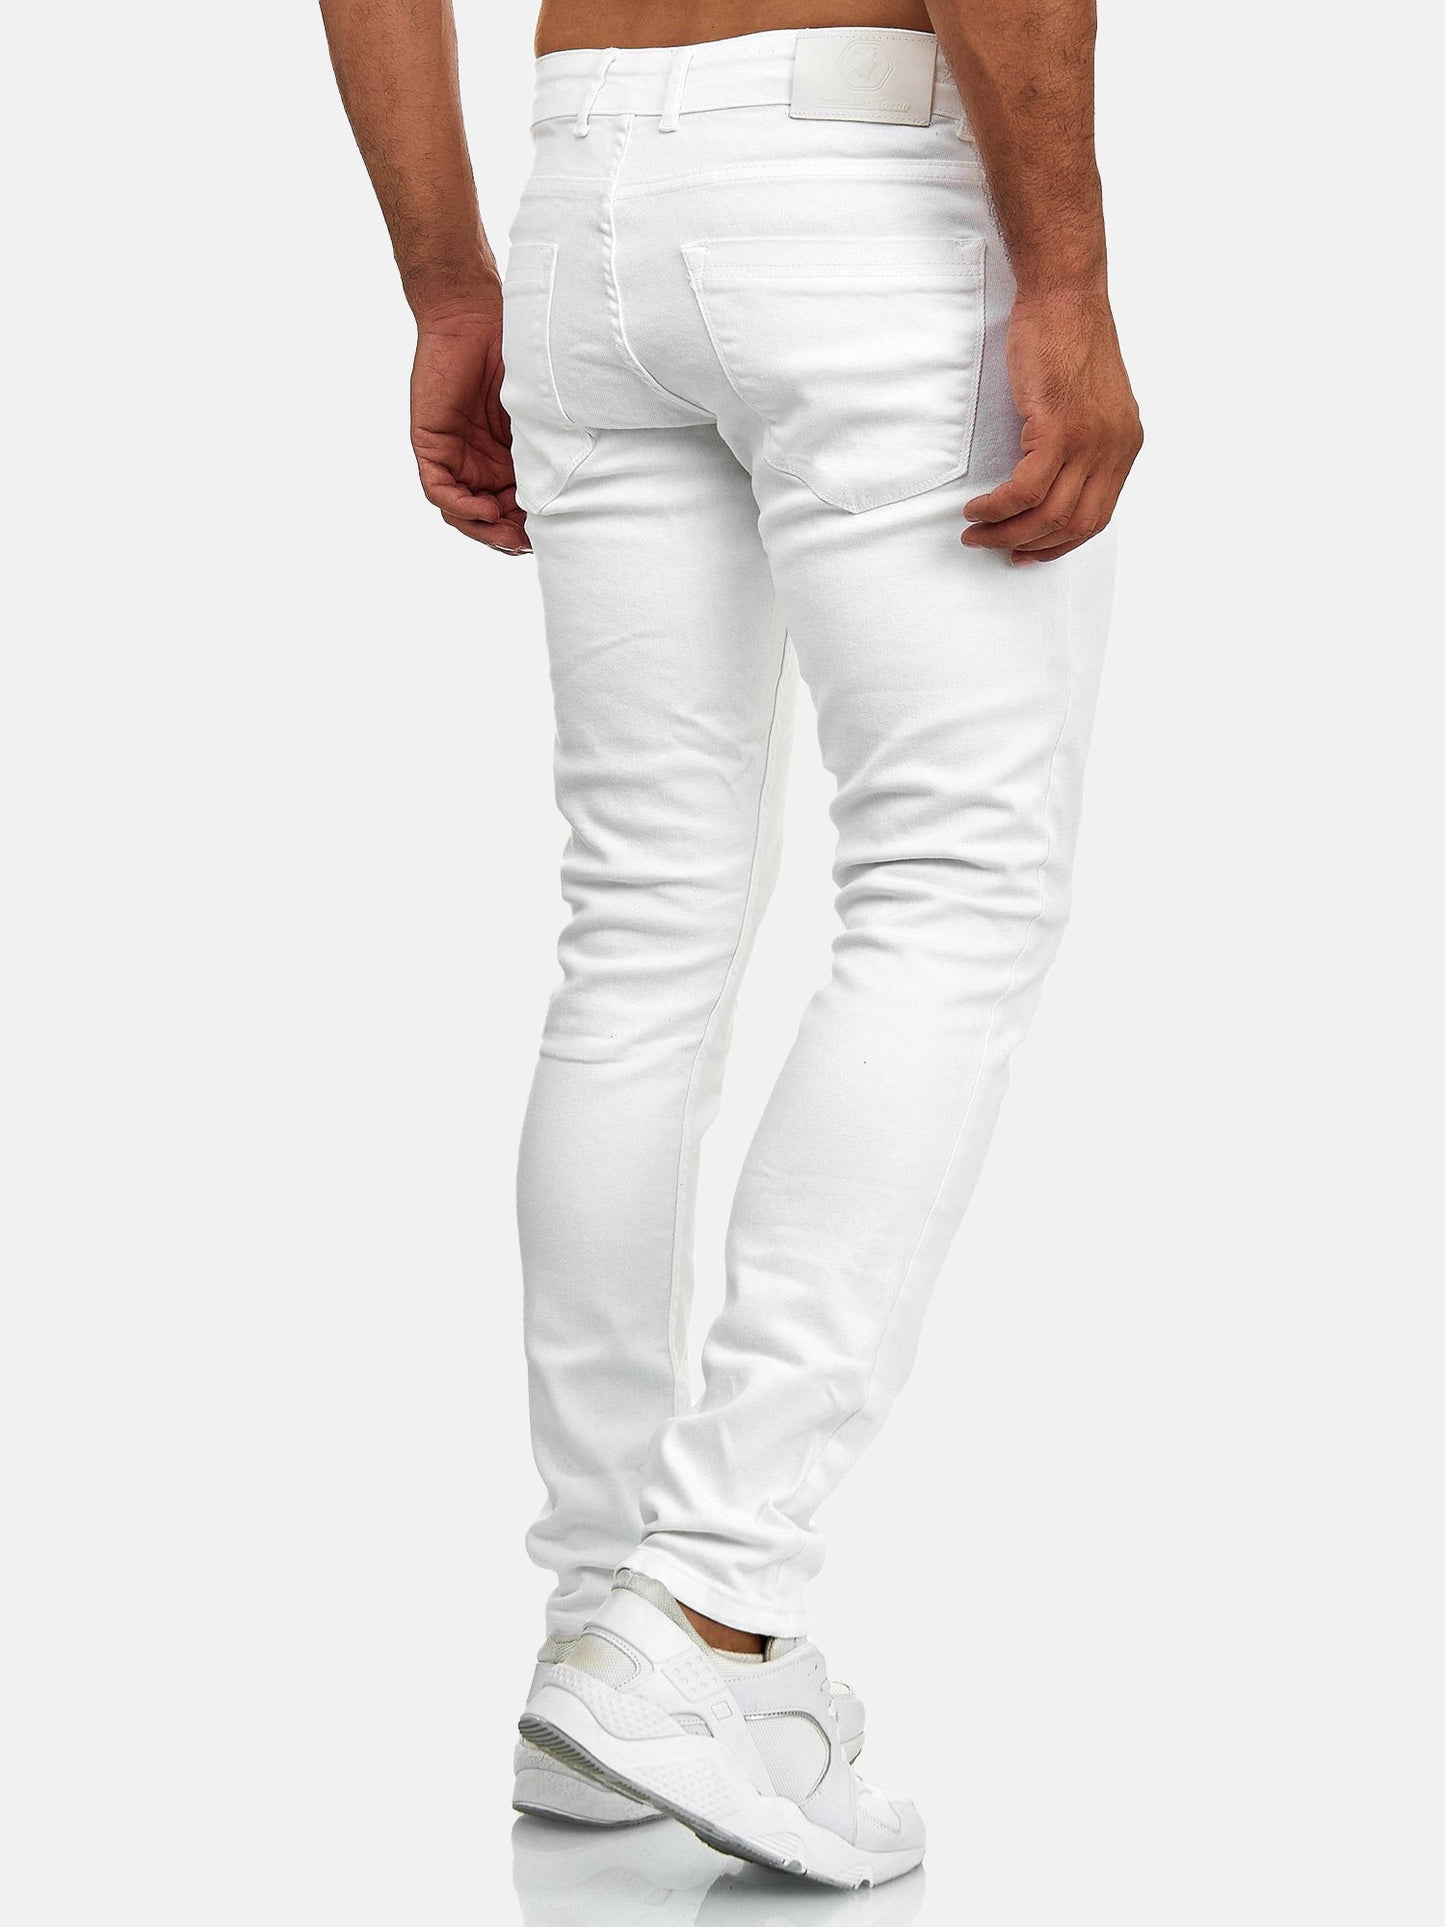 Tazzio Herren Jeans Slim Fit Destroyed Look 16525 Weiß